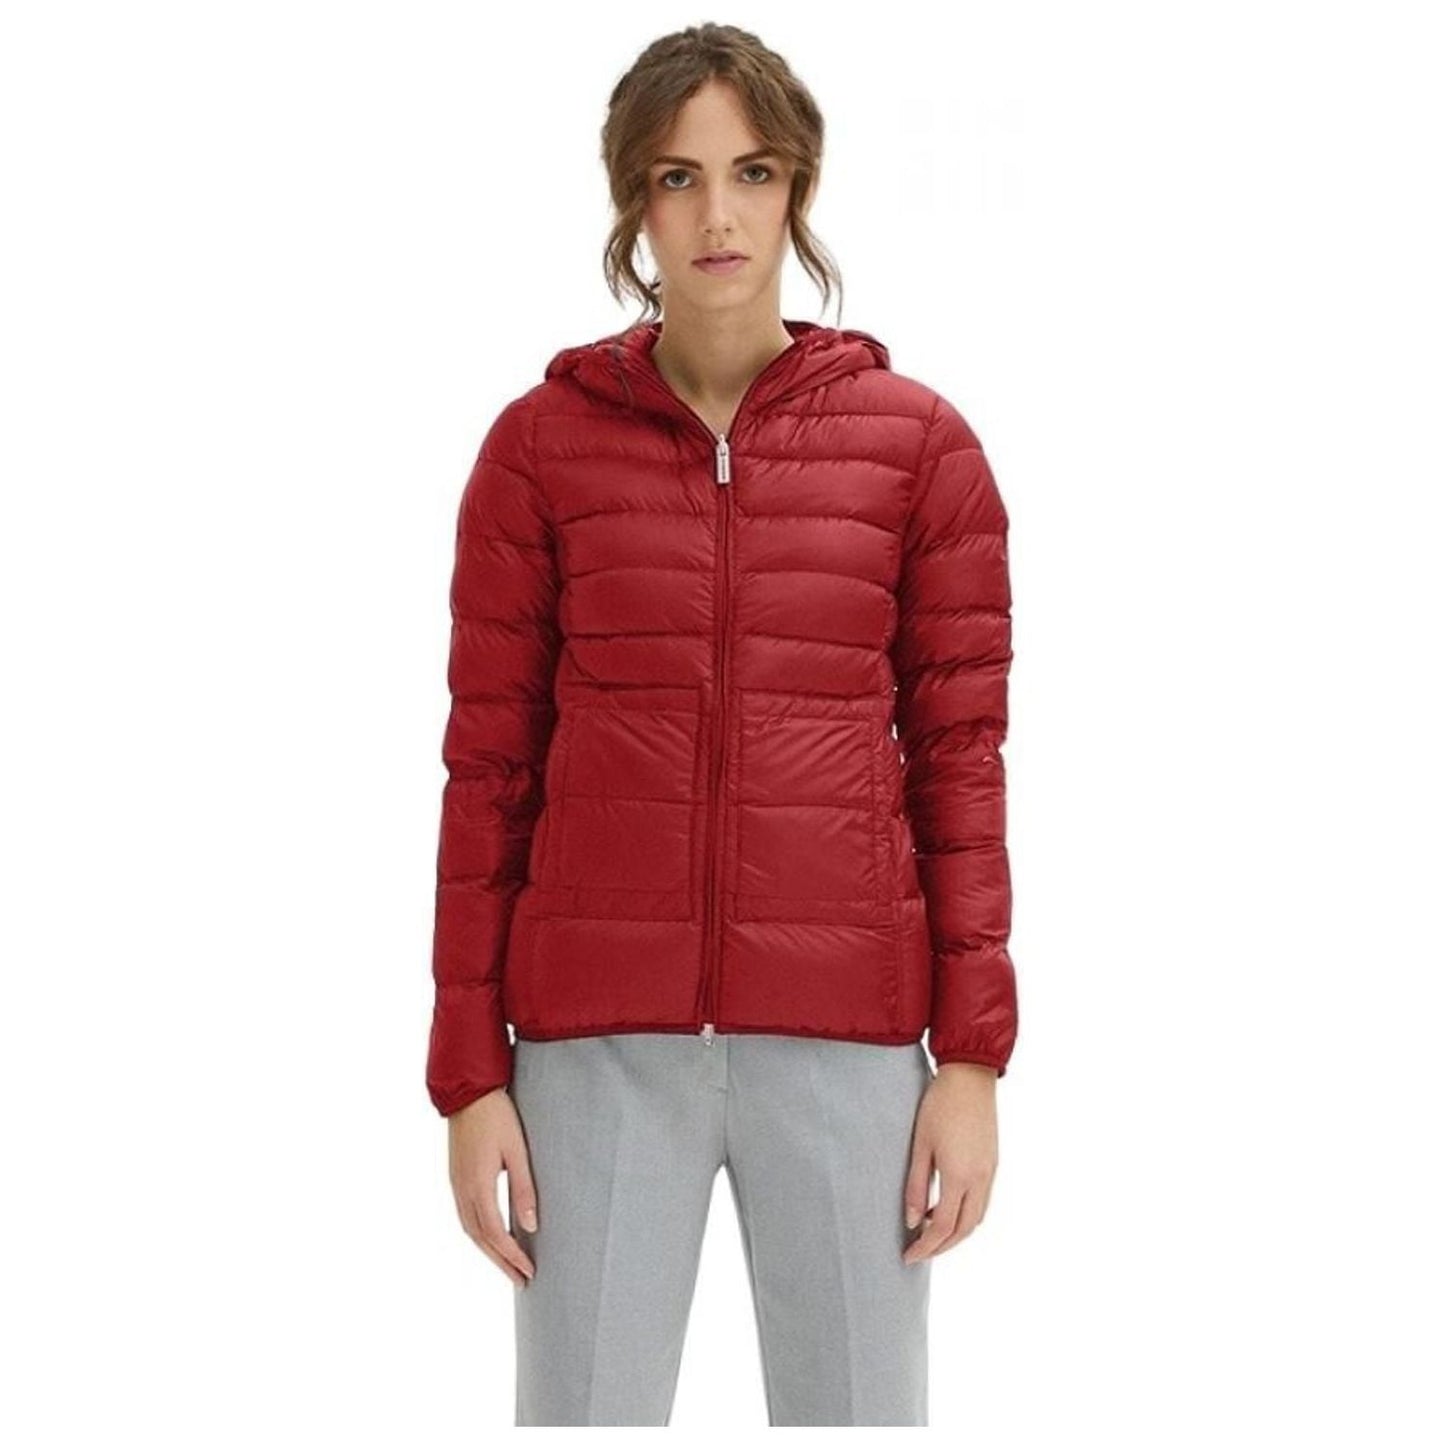 Centogrammi Elegant Ultra Light Hooded Down Jacket red-nylon-jackets-coat-2 product-8591-617119829-f63ec3d9-9b2.jpg